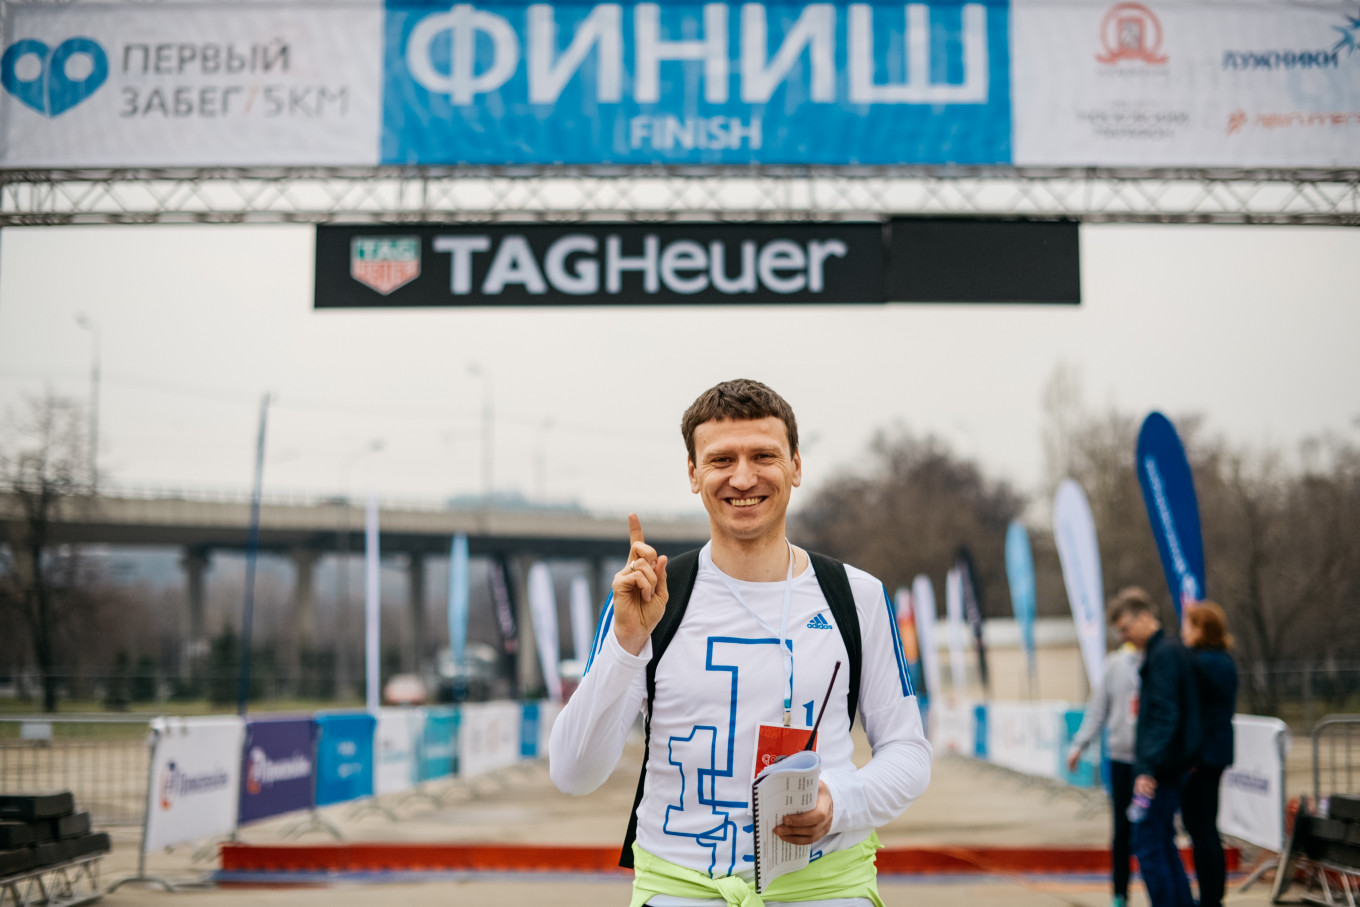 
					Moscow Marathon director Dmitry Tarasov crossing the finish line in style.					 					Courtesy Moscow Marathon				